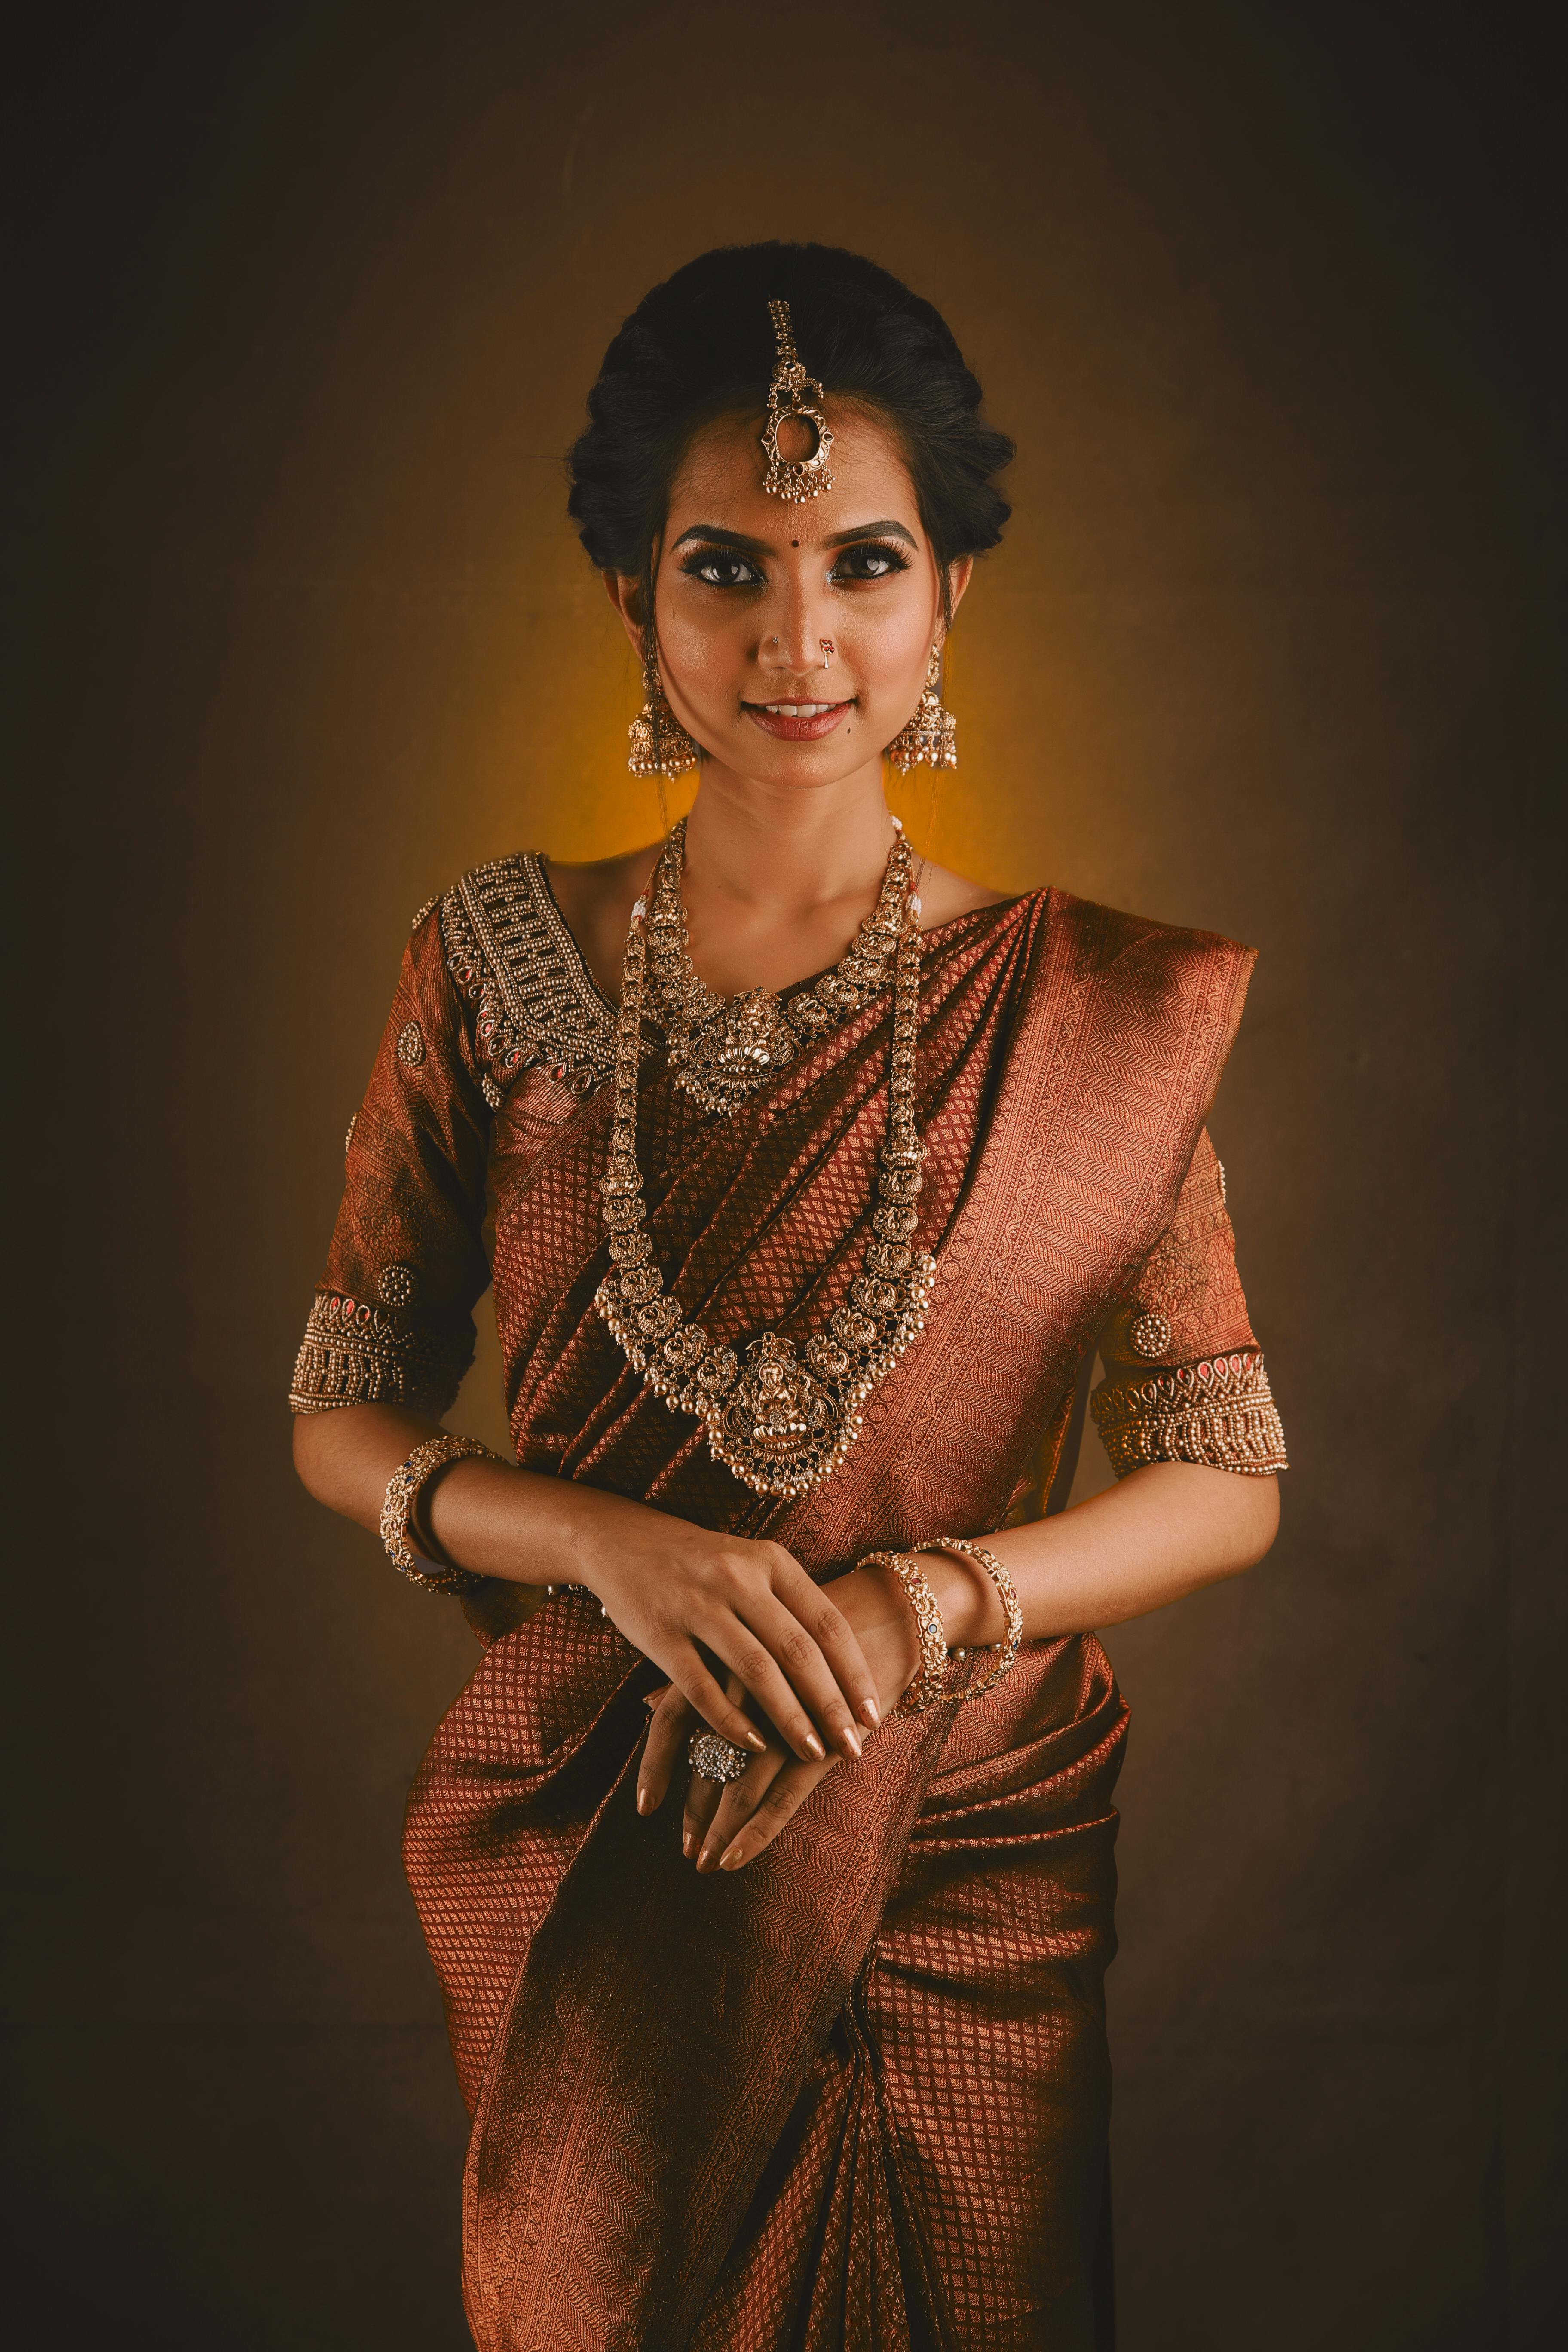 11,800+ Sari Dress Stock Photos, Pictures & Royalty-Free Images